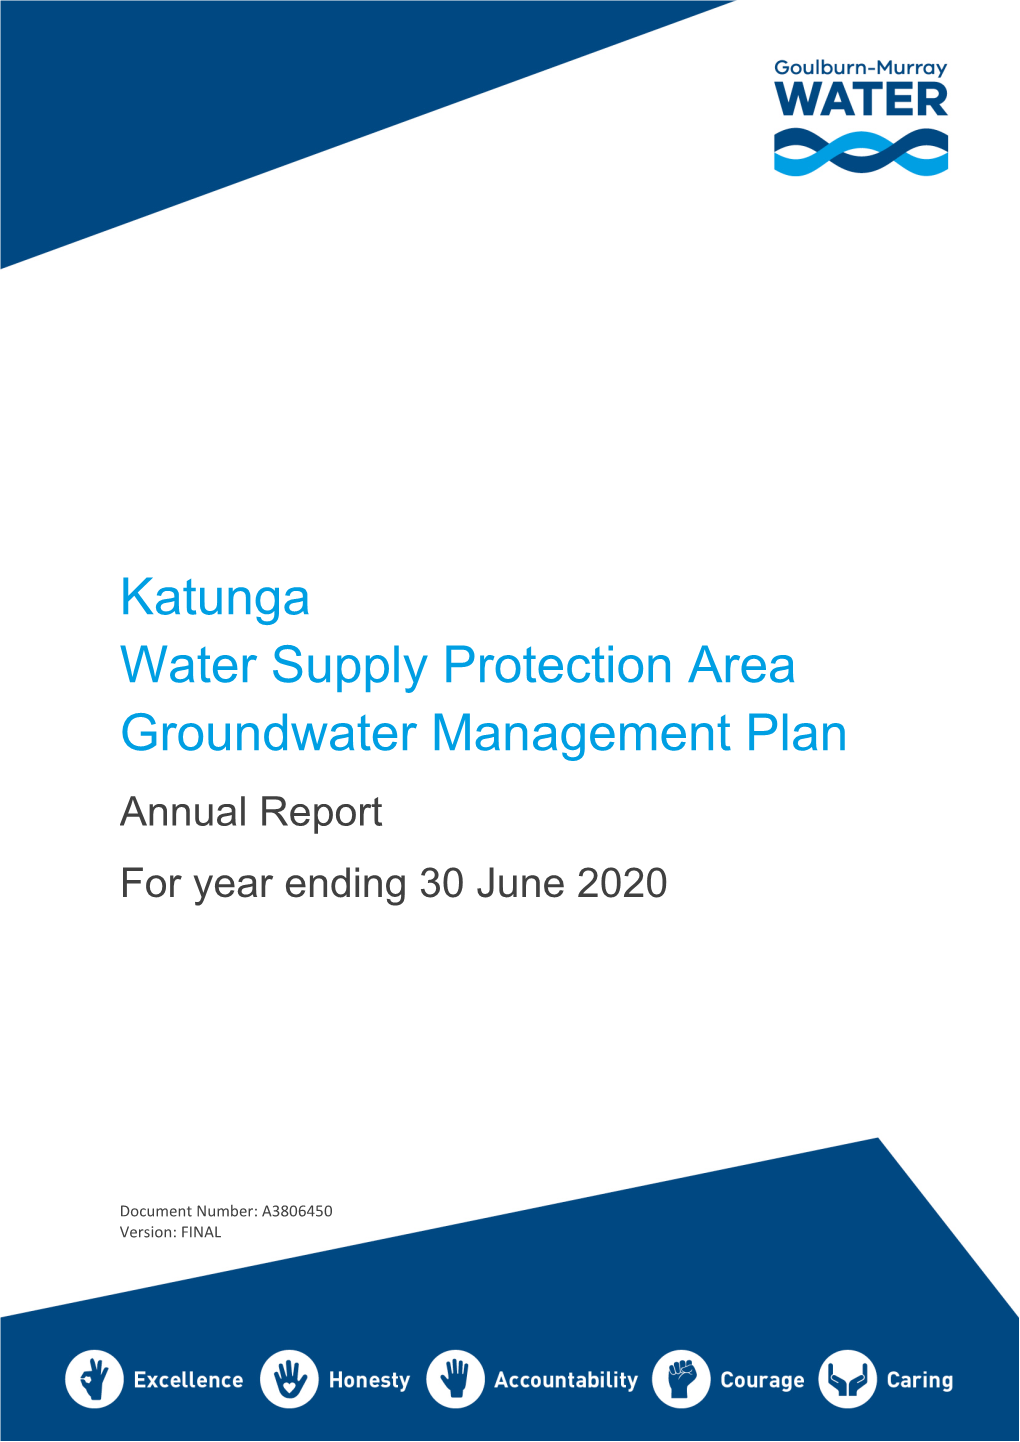 Katunga WSPA Annual Report 2019/20